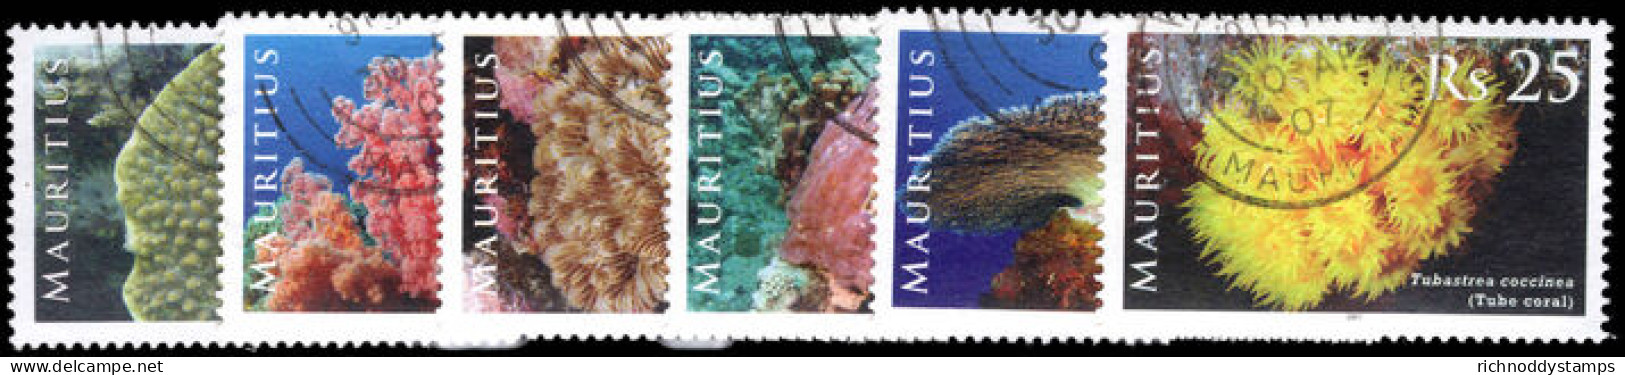 Mauritius 2004 Corals Fine Used. - Mauritius (1968-...)